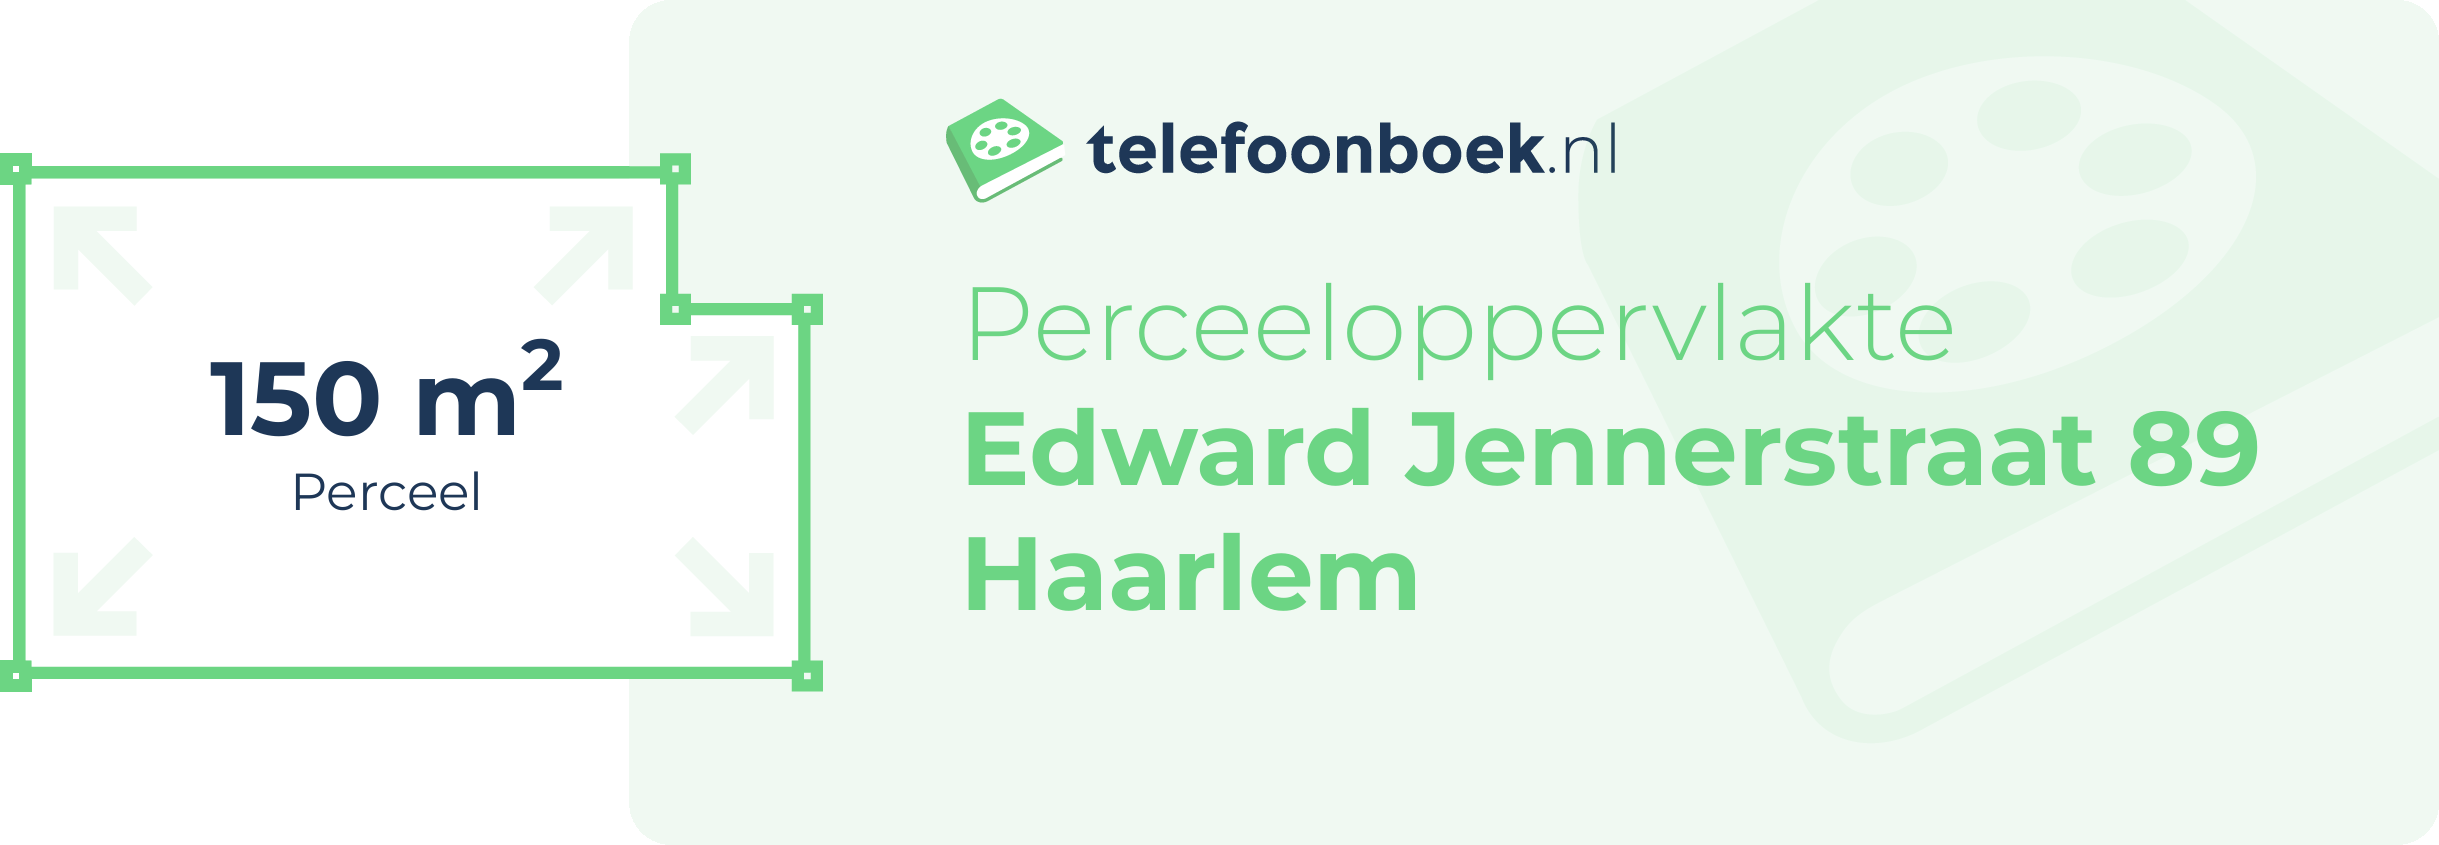 Perceeloppervlakte Edward Jennerstraat 89 Haarlem